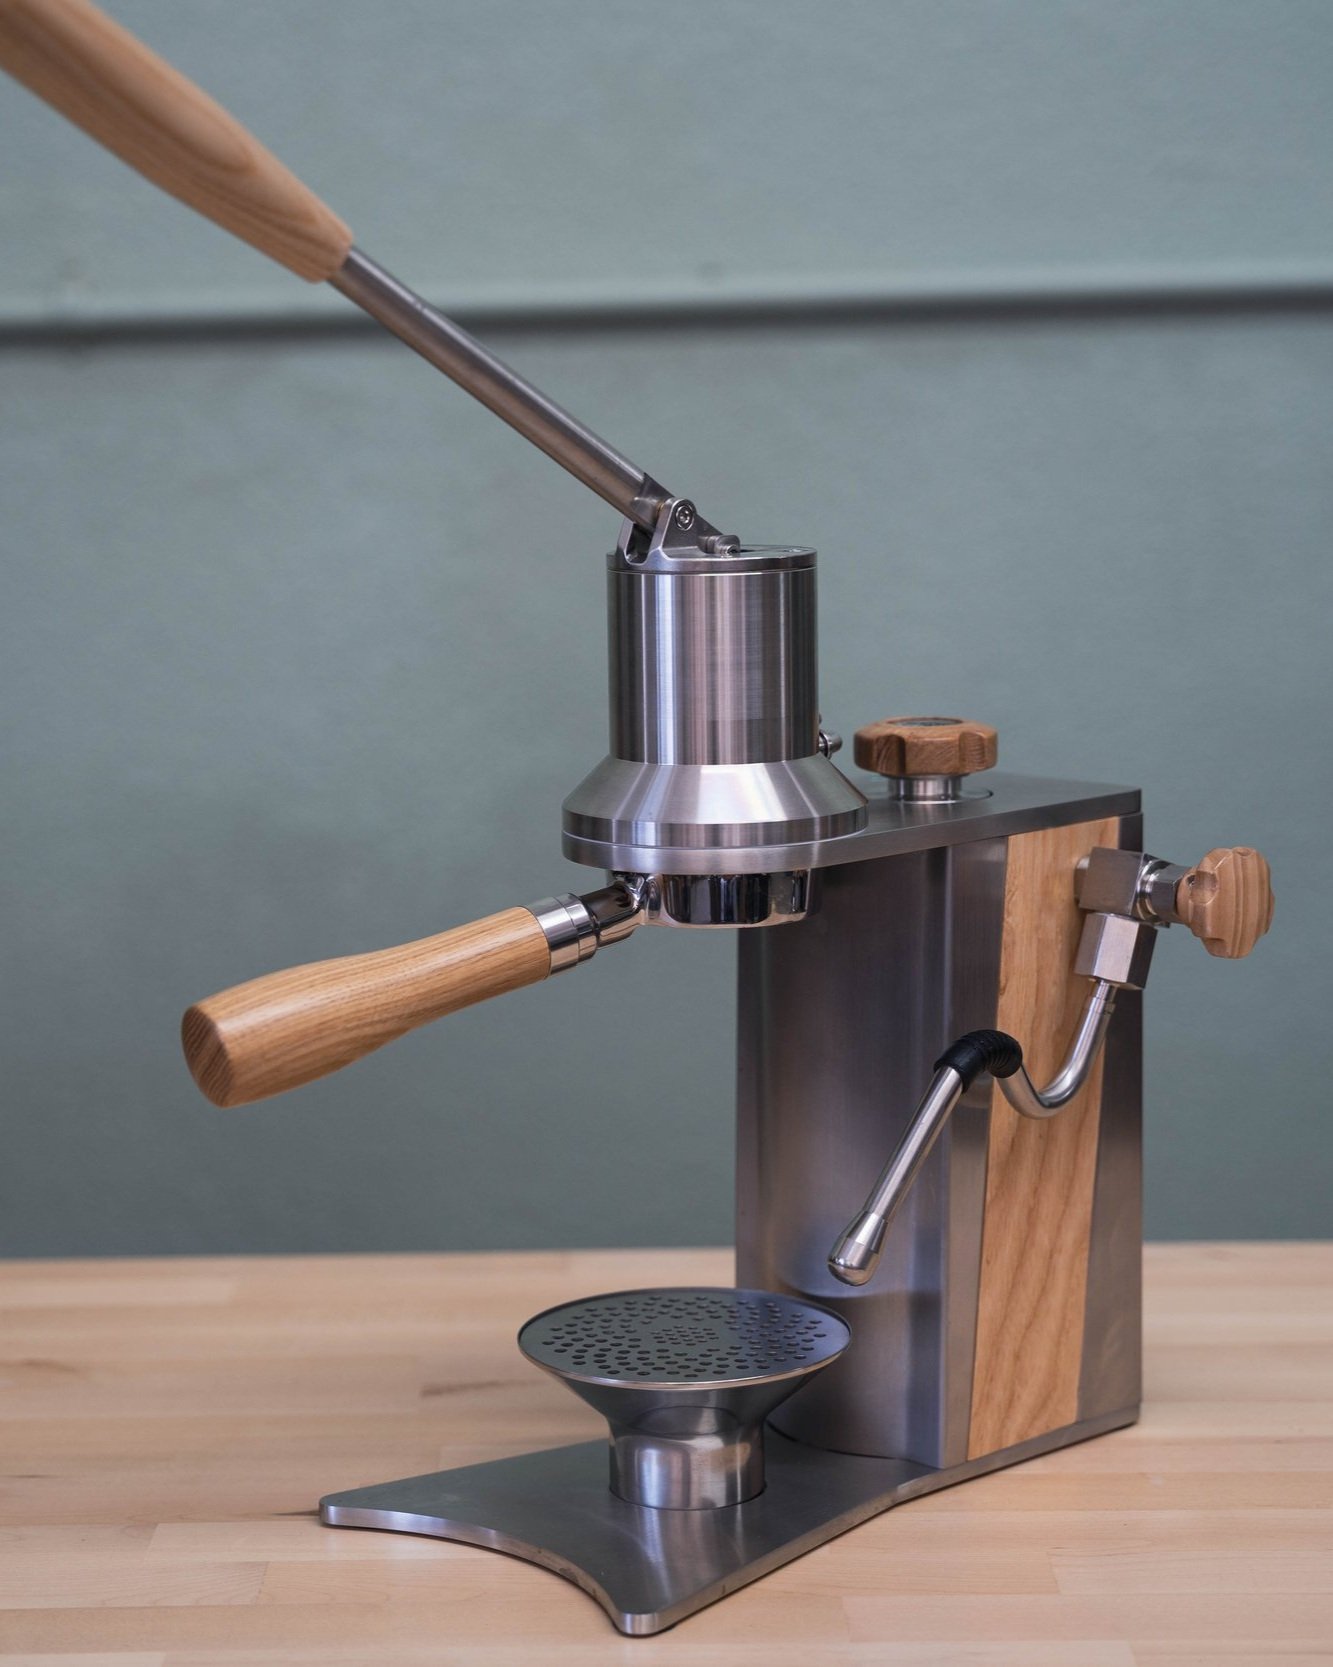 Lever Pull Manual Stainless Steel Espresso Coffee Machine Italian